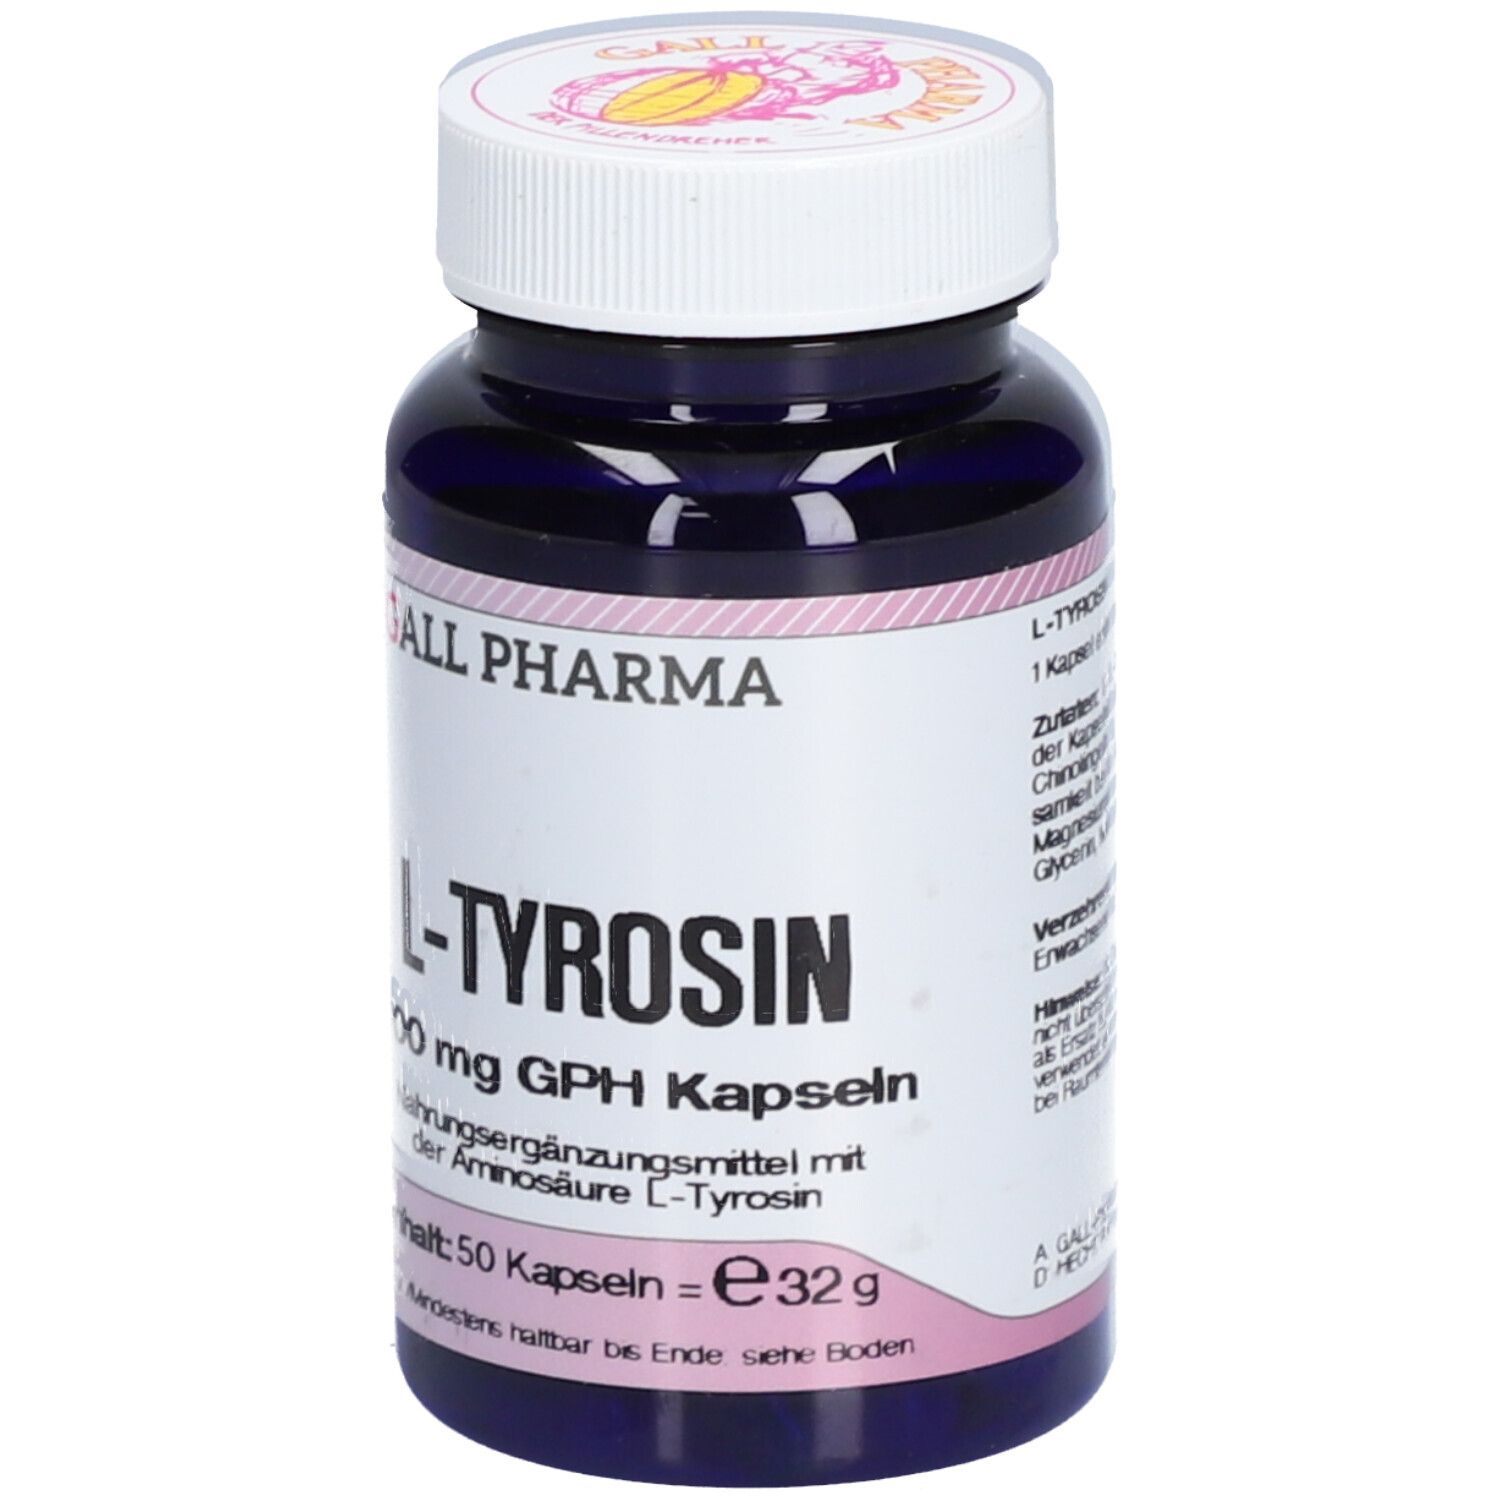 GALL PHARMA L-Tyrosin 500 mg GPH Kapseln